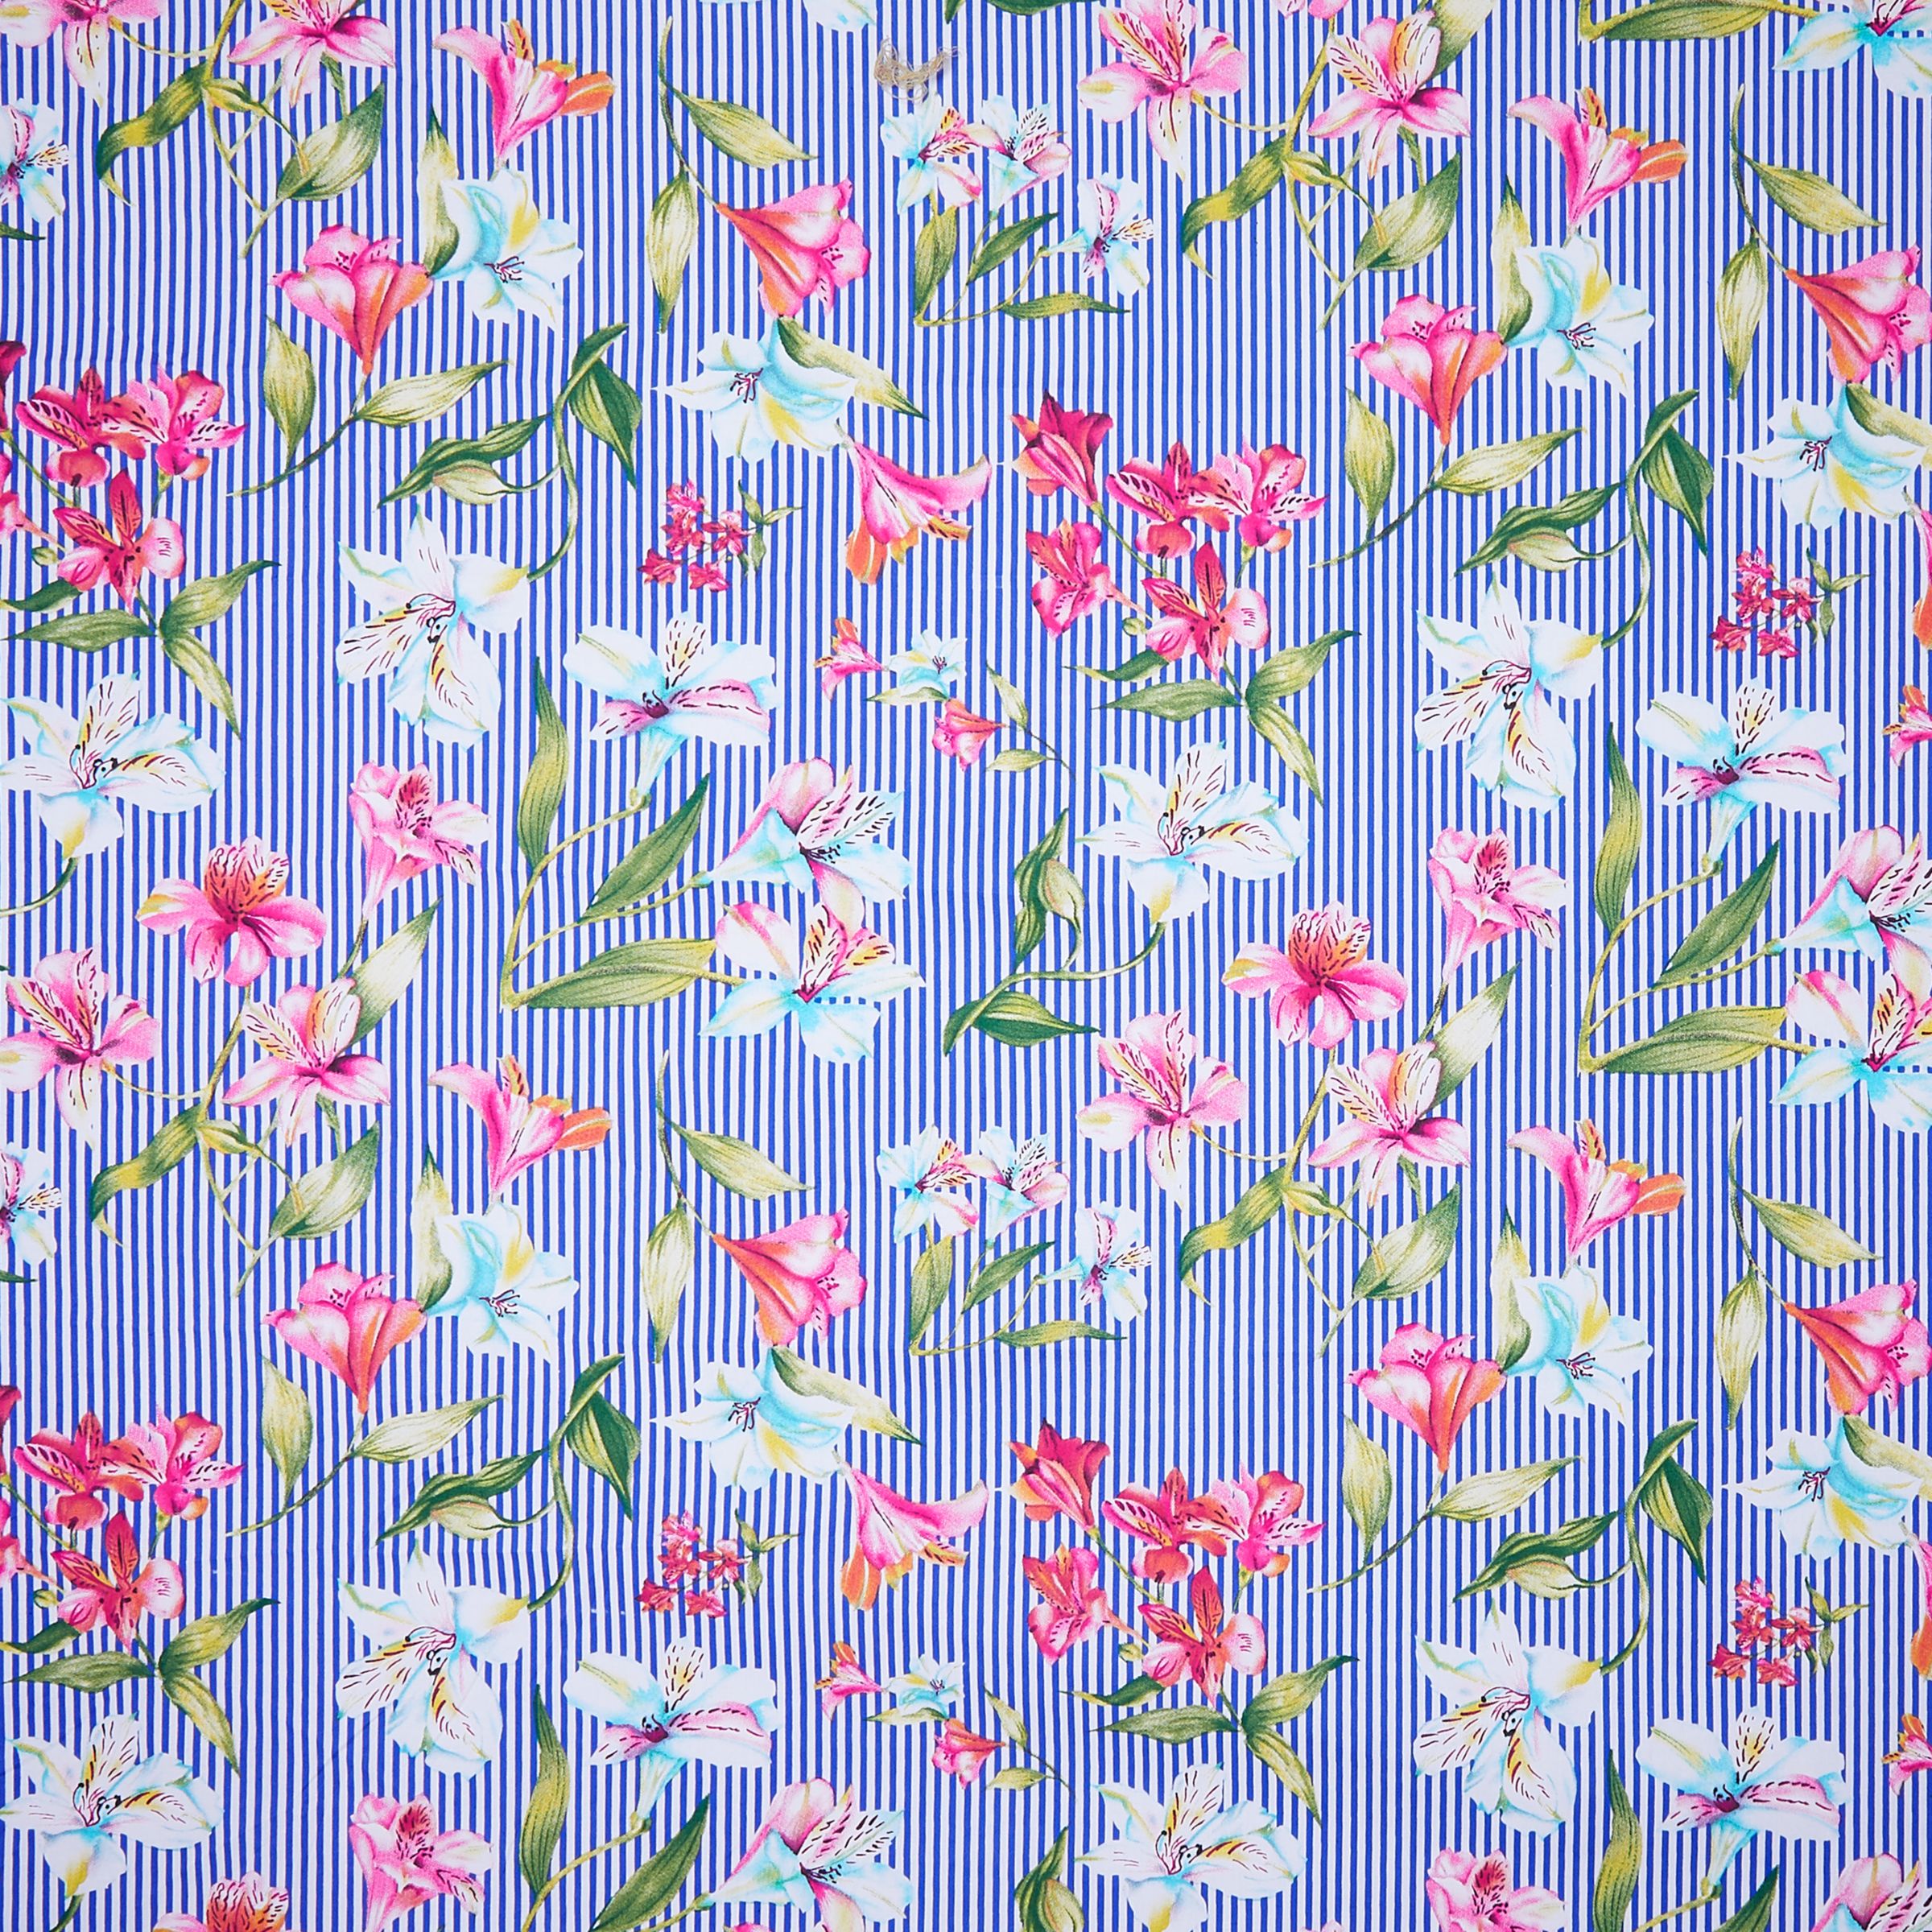 Viscount Textiles Firenze Stripe With Flower Print Fabric, Light Blue